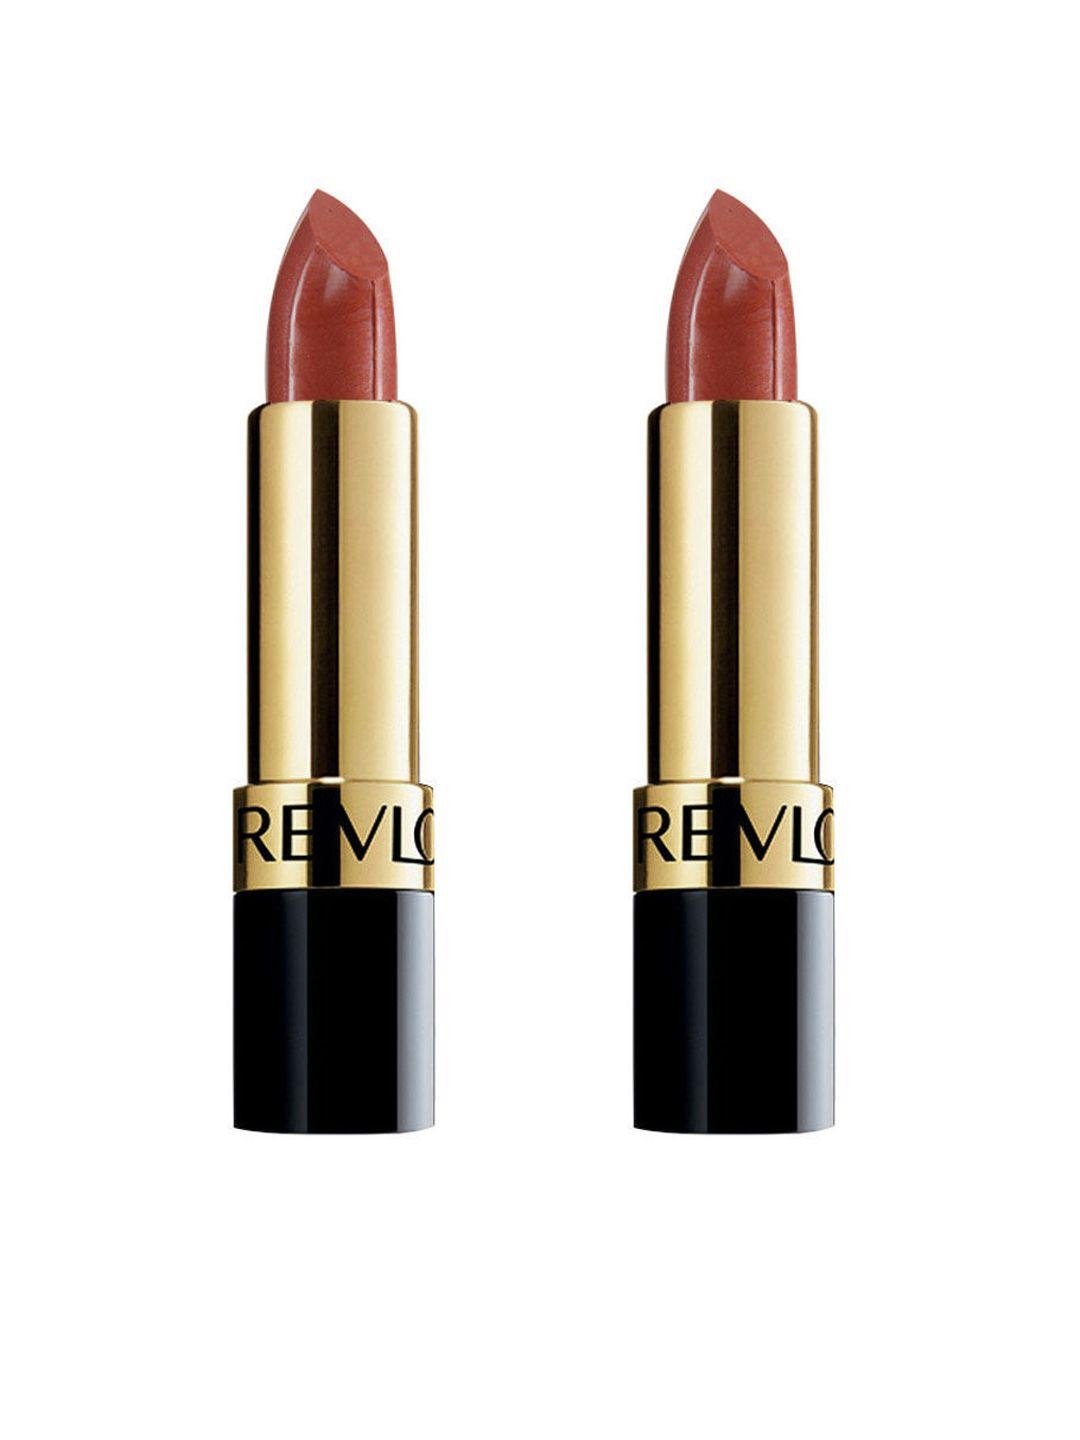 Revlon Set of 2 Lipsticks